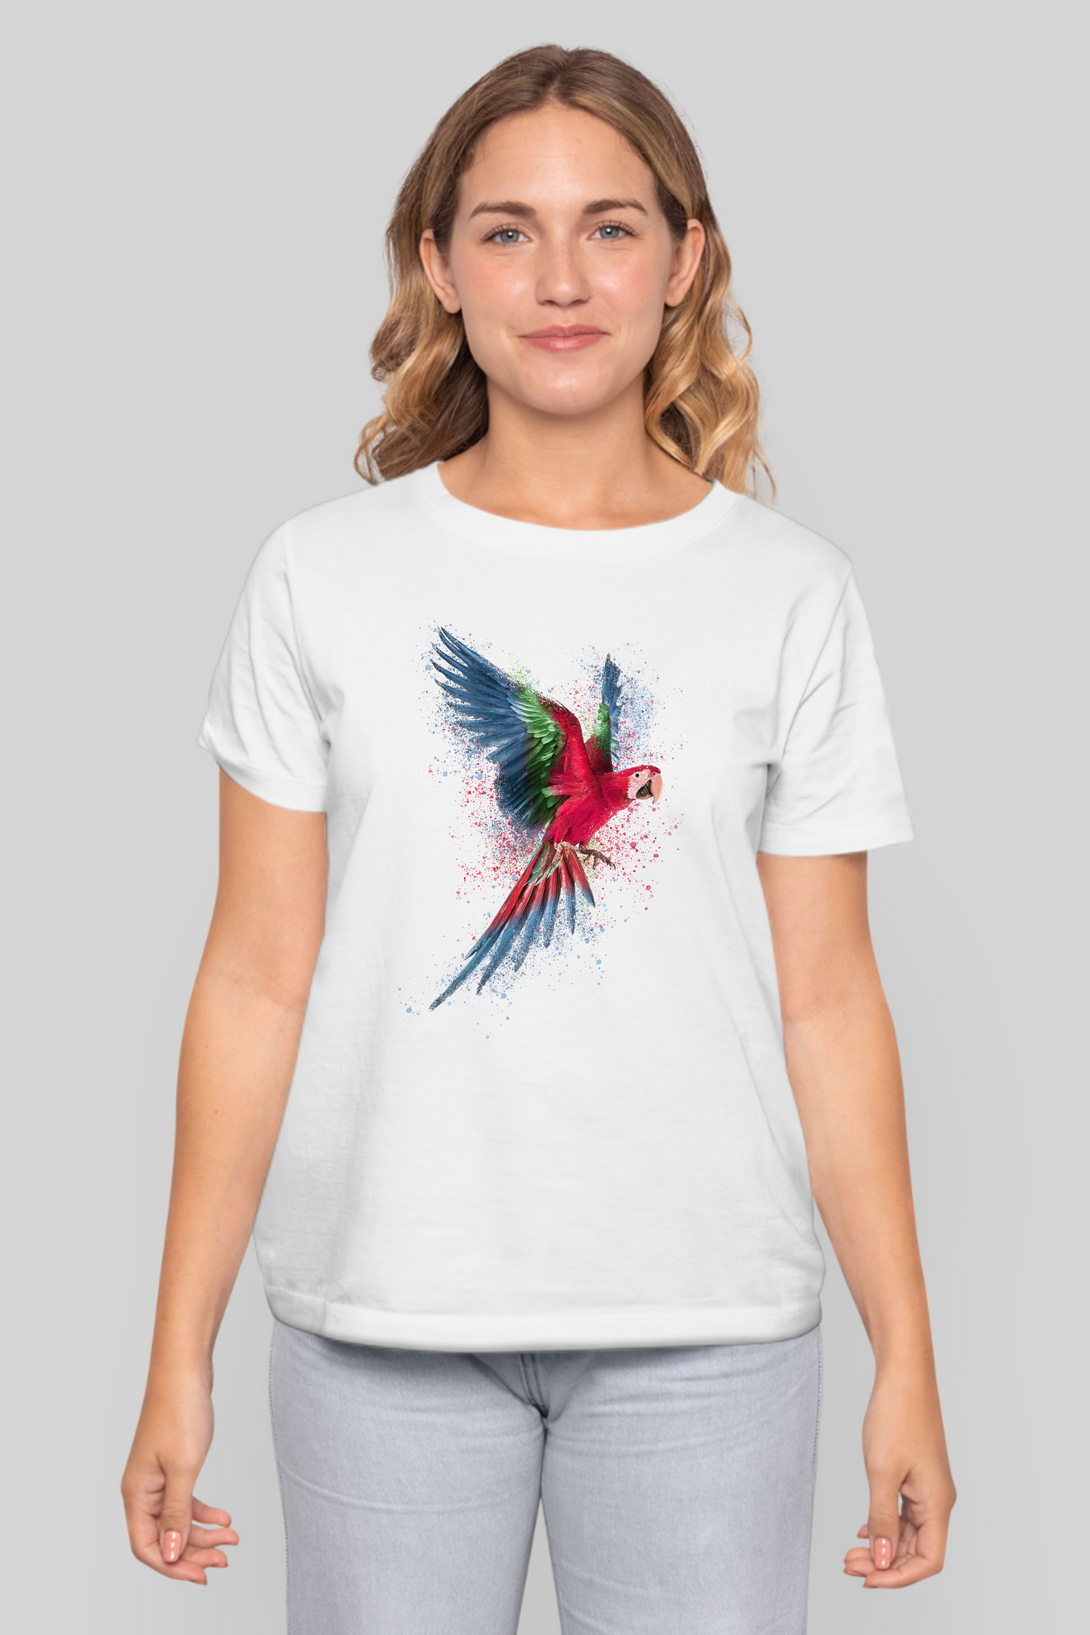 Vibrant Parrot Printed T-Shirt For Women - WowWaves - 8